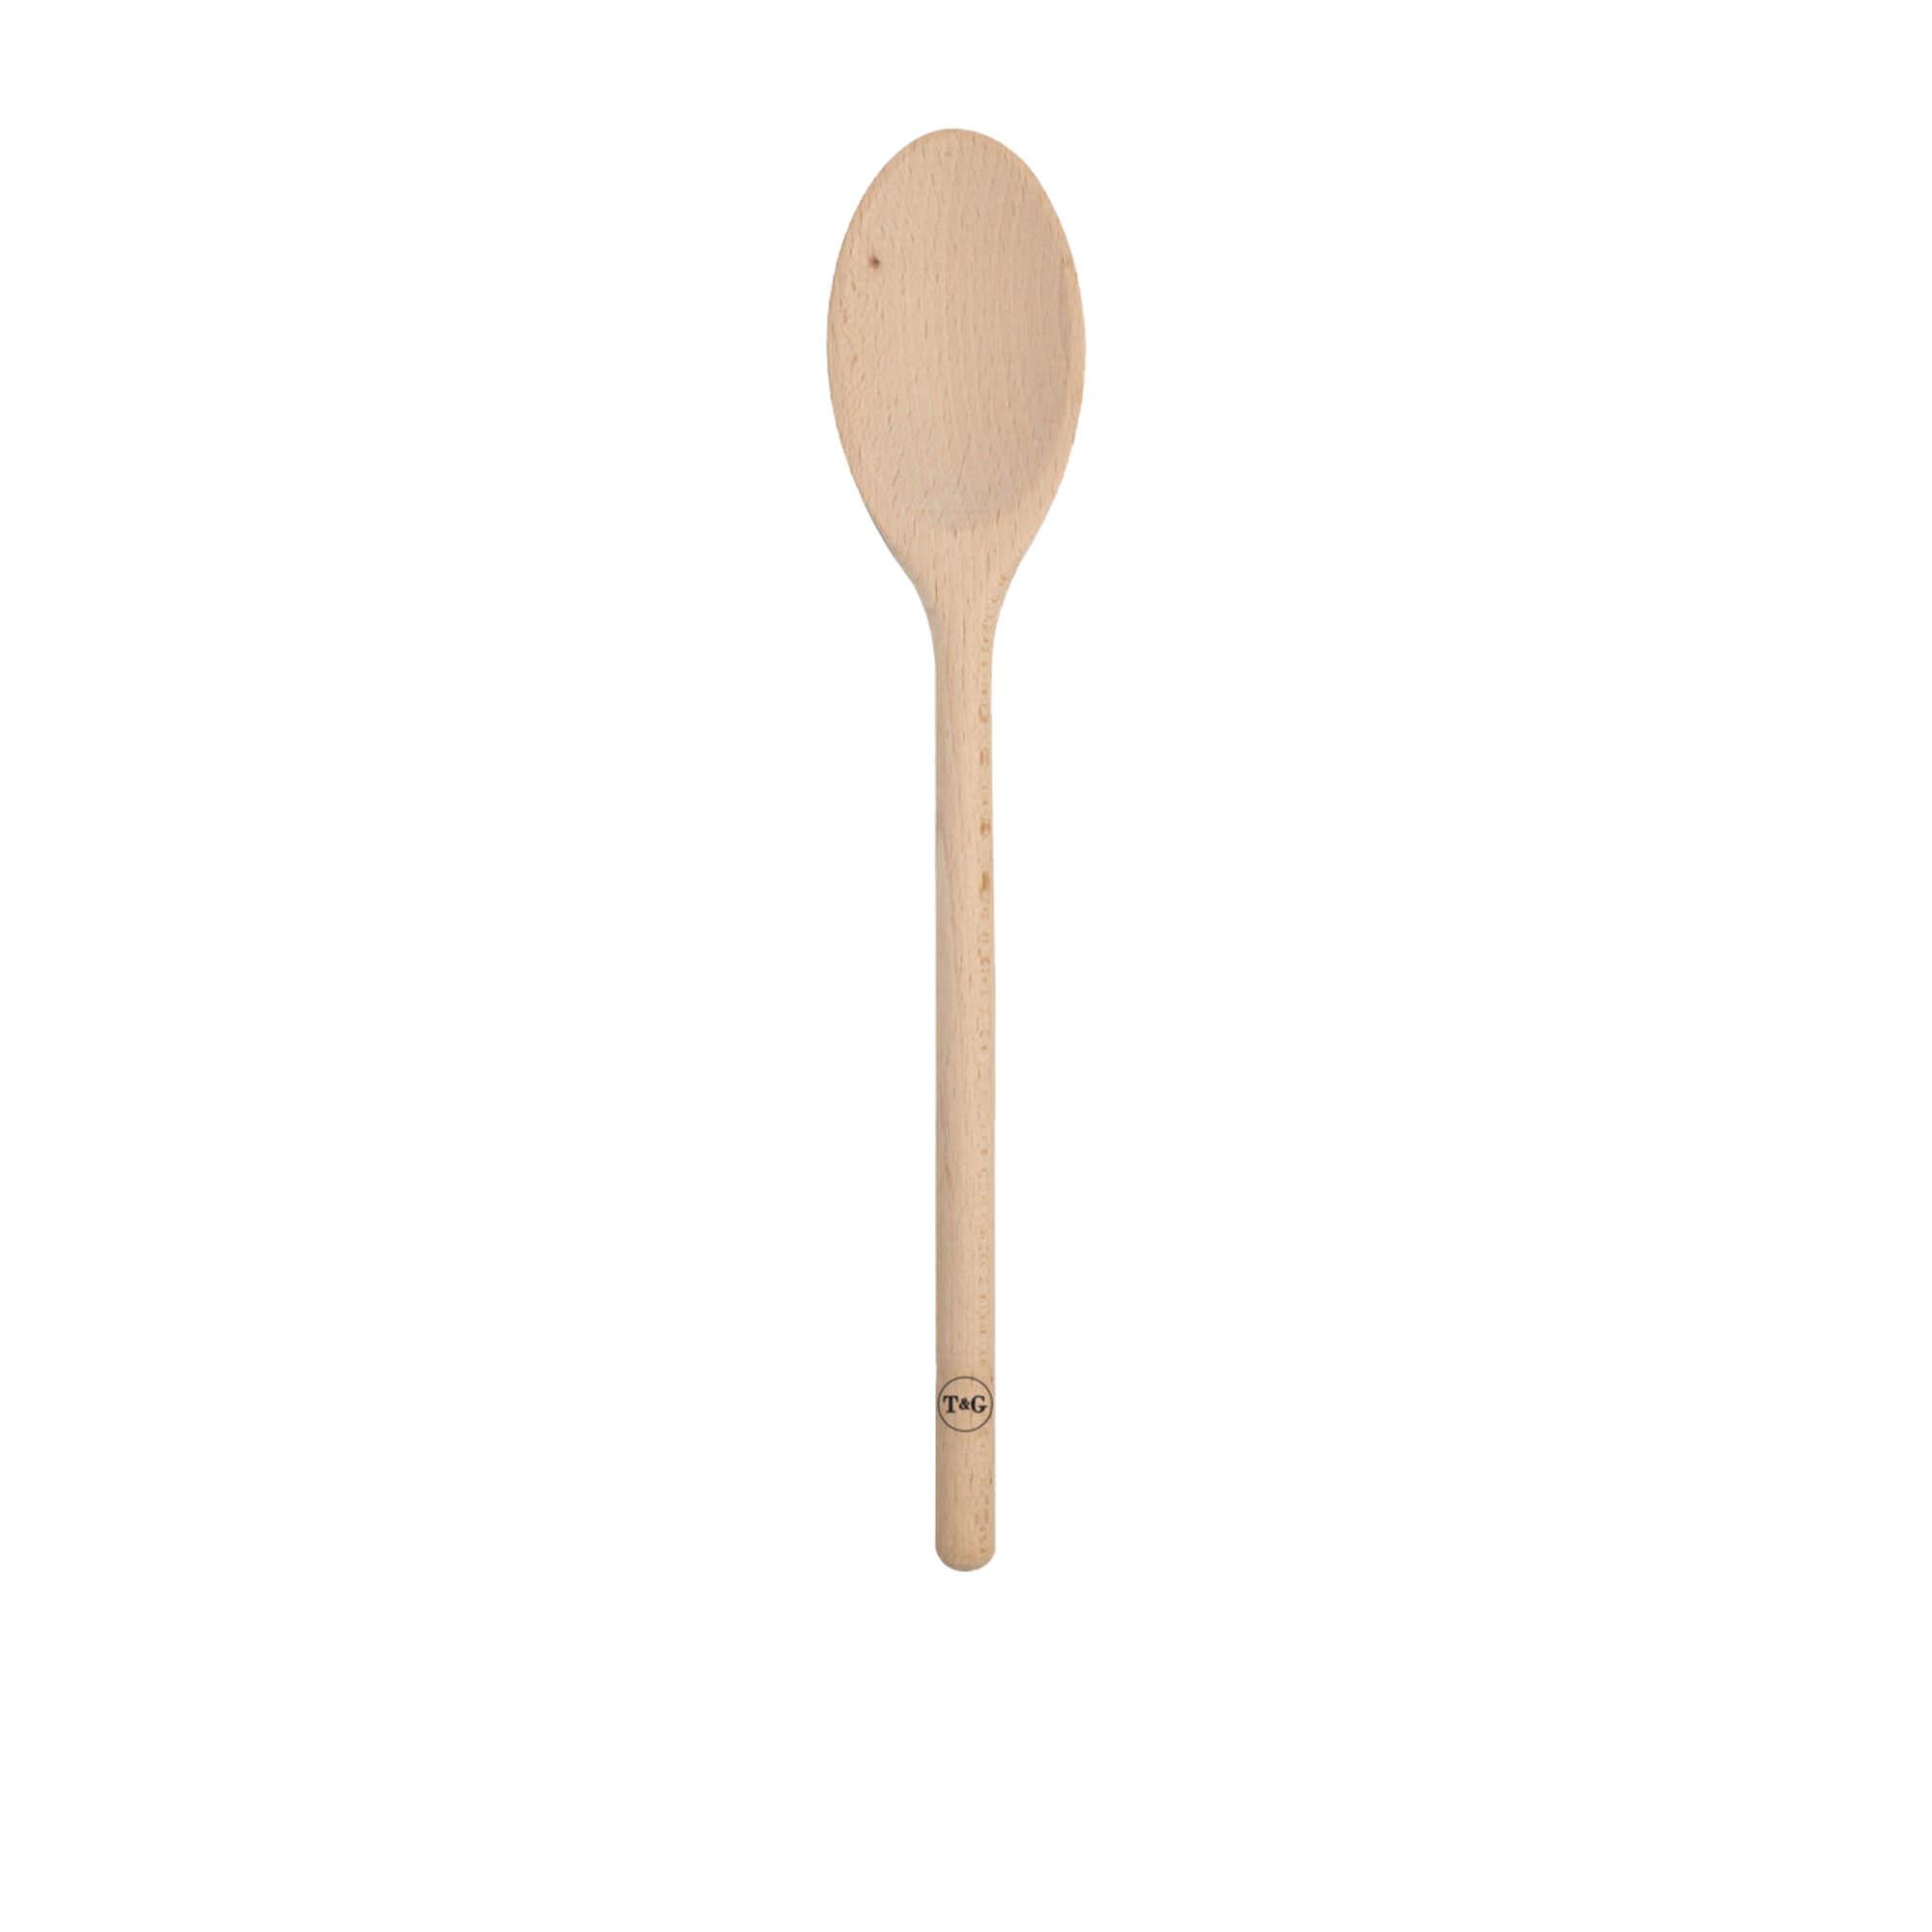 Wild Wood Wooden Spoon 30cm Image 2